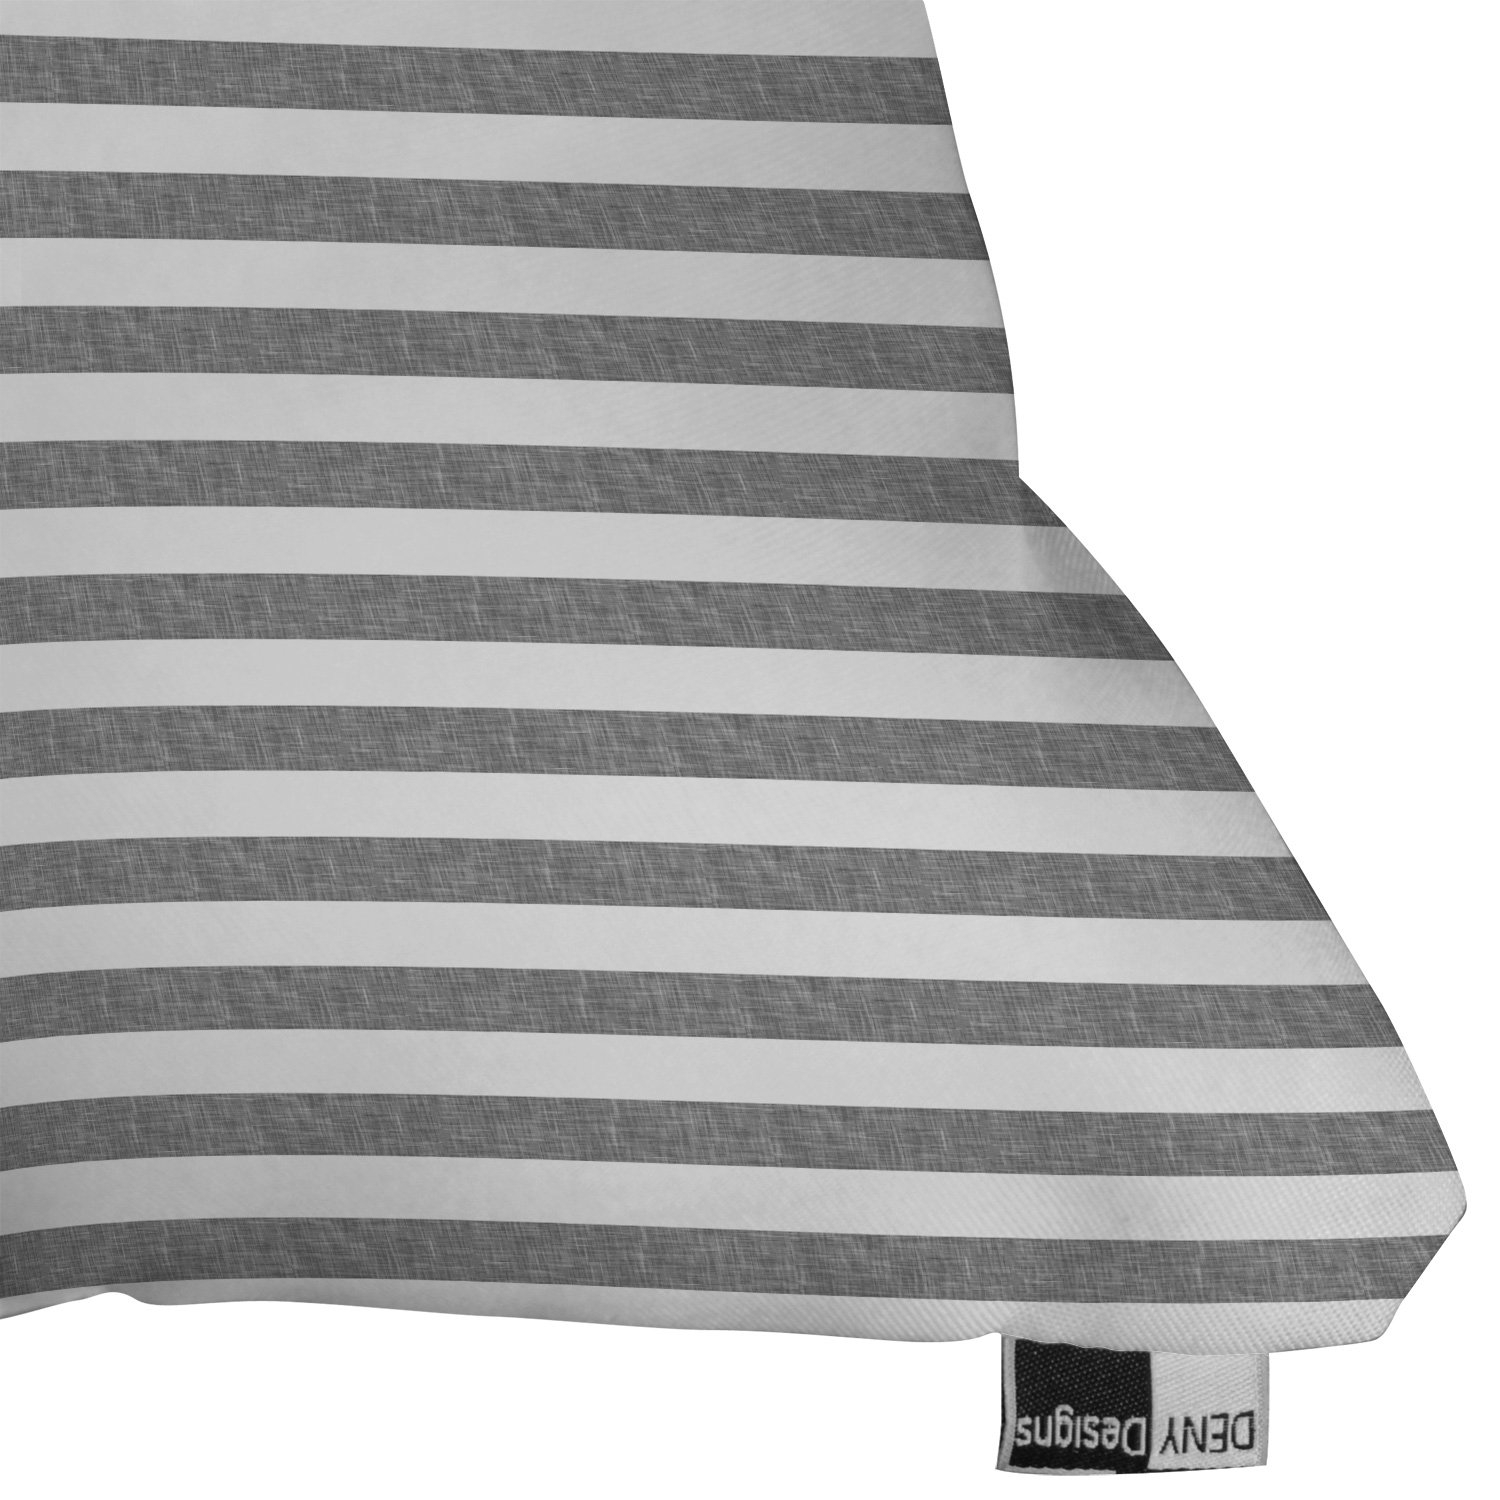 Little Arrow Design Co Stripes in Grey Outdoor Throw Pillow - 20" x 20" - Image 1